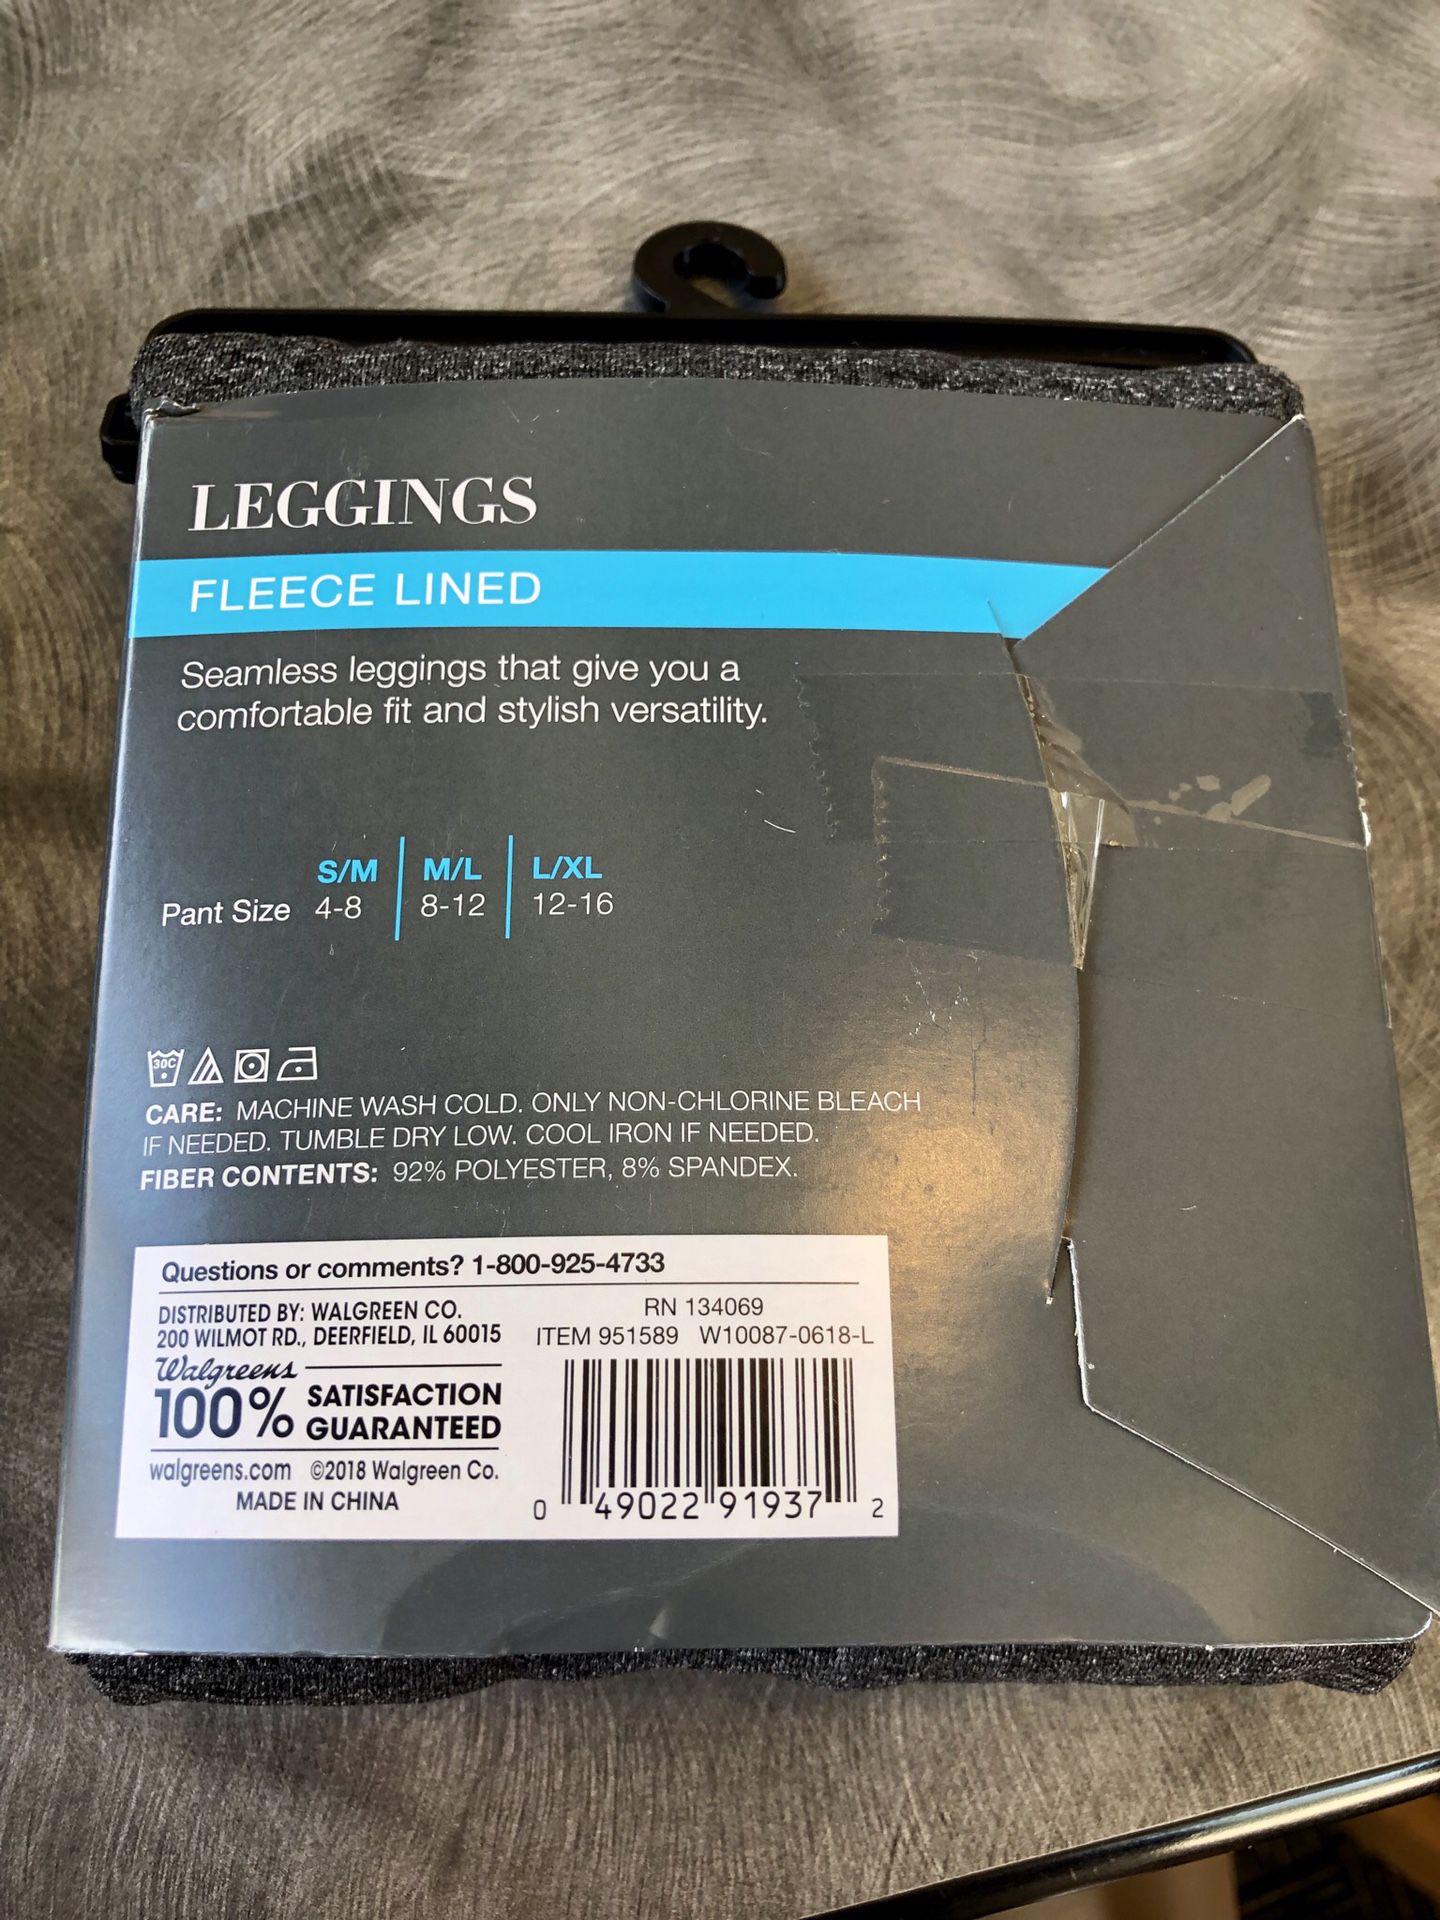 West Loop Seamless Leggings Fleece Lined Heather Grey M/L (Pant Size 8-12)